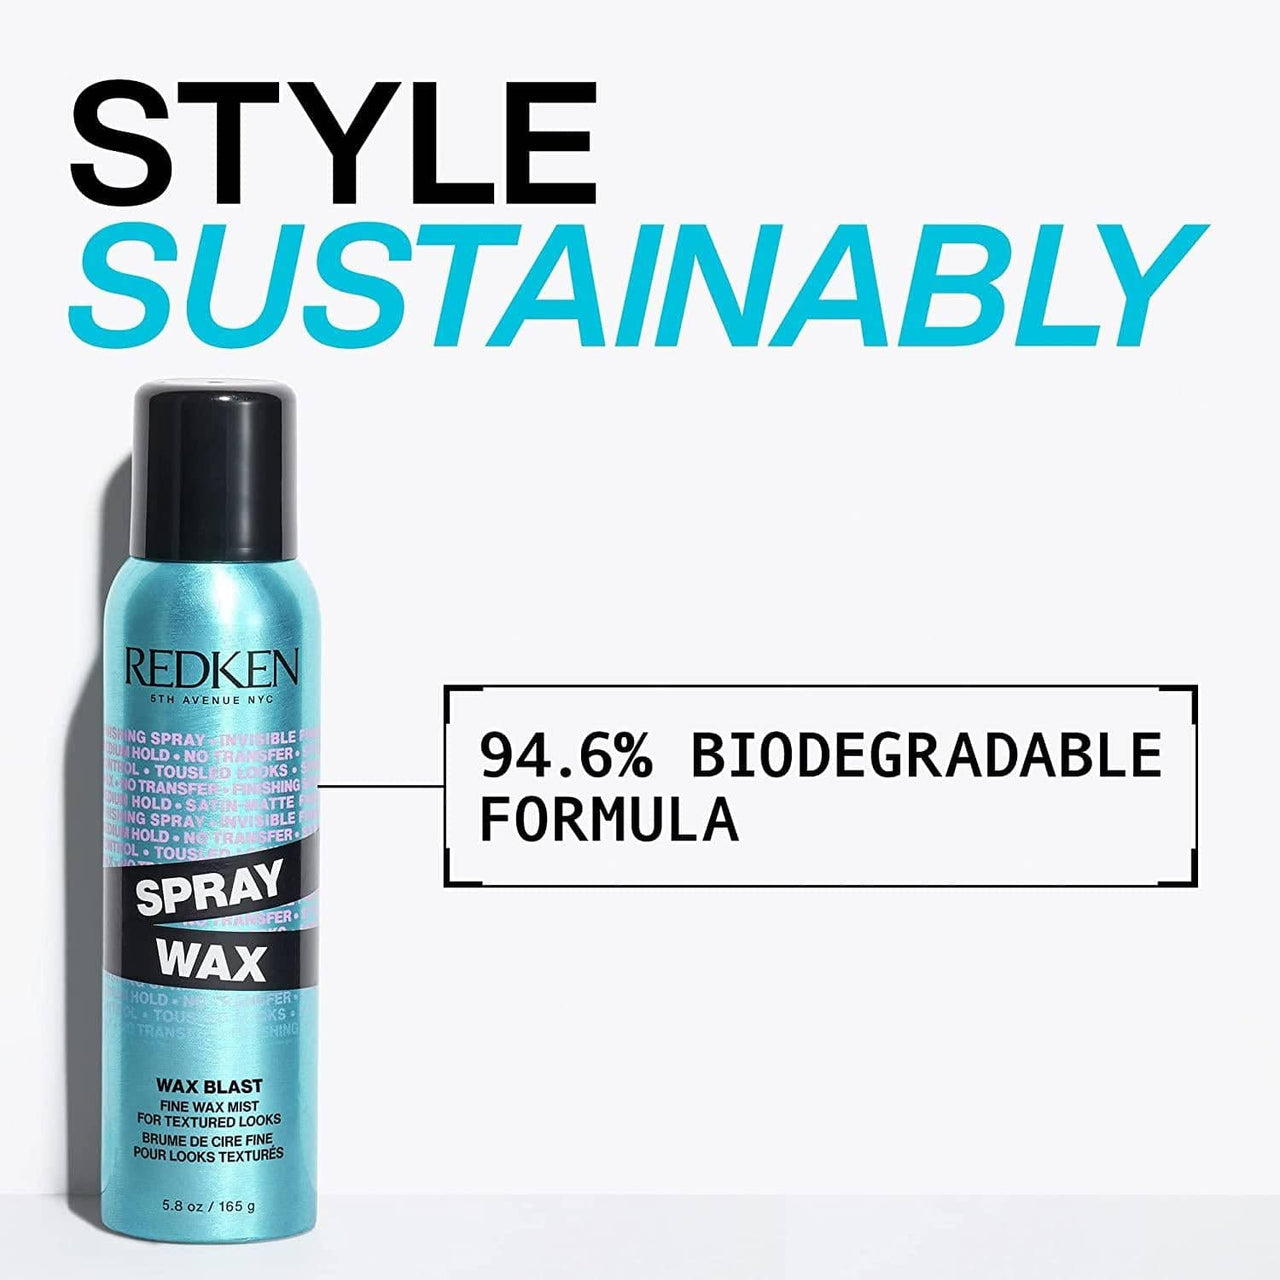 REDKEN_Spray Wax Fine Wax Mist 165g / 5.8oz_Cosmetic World